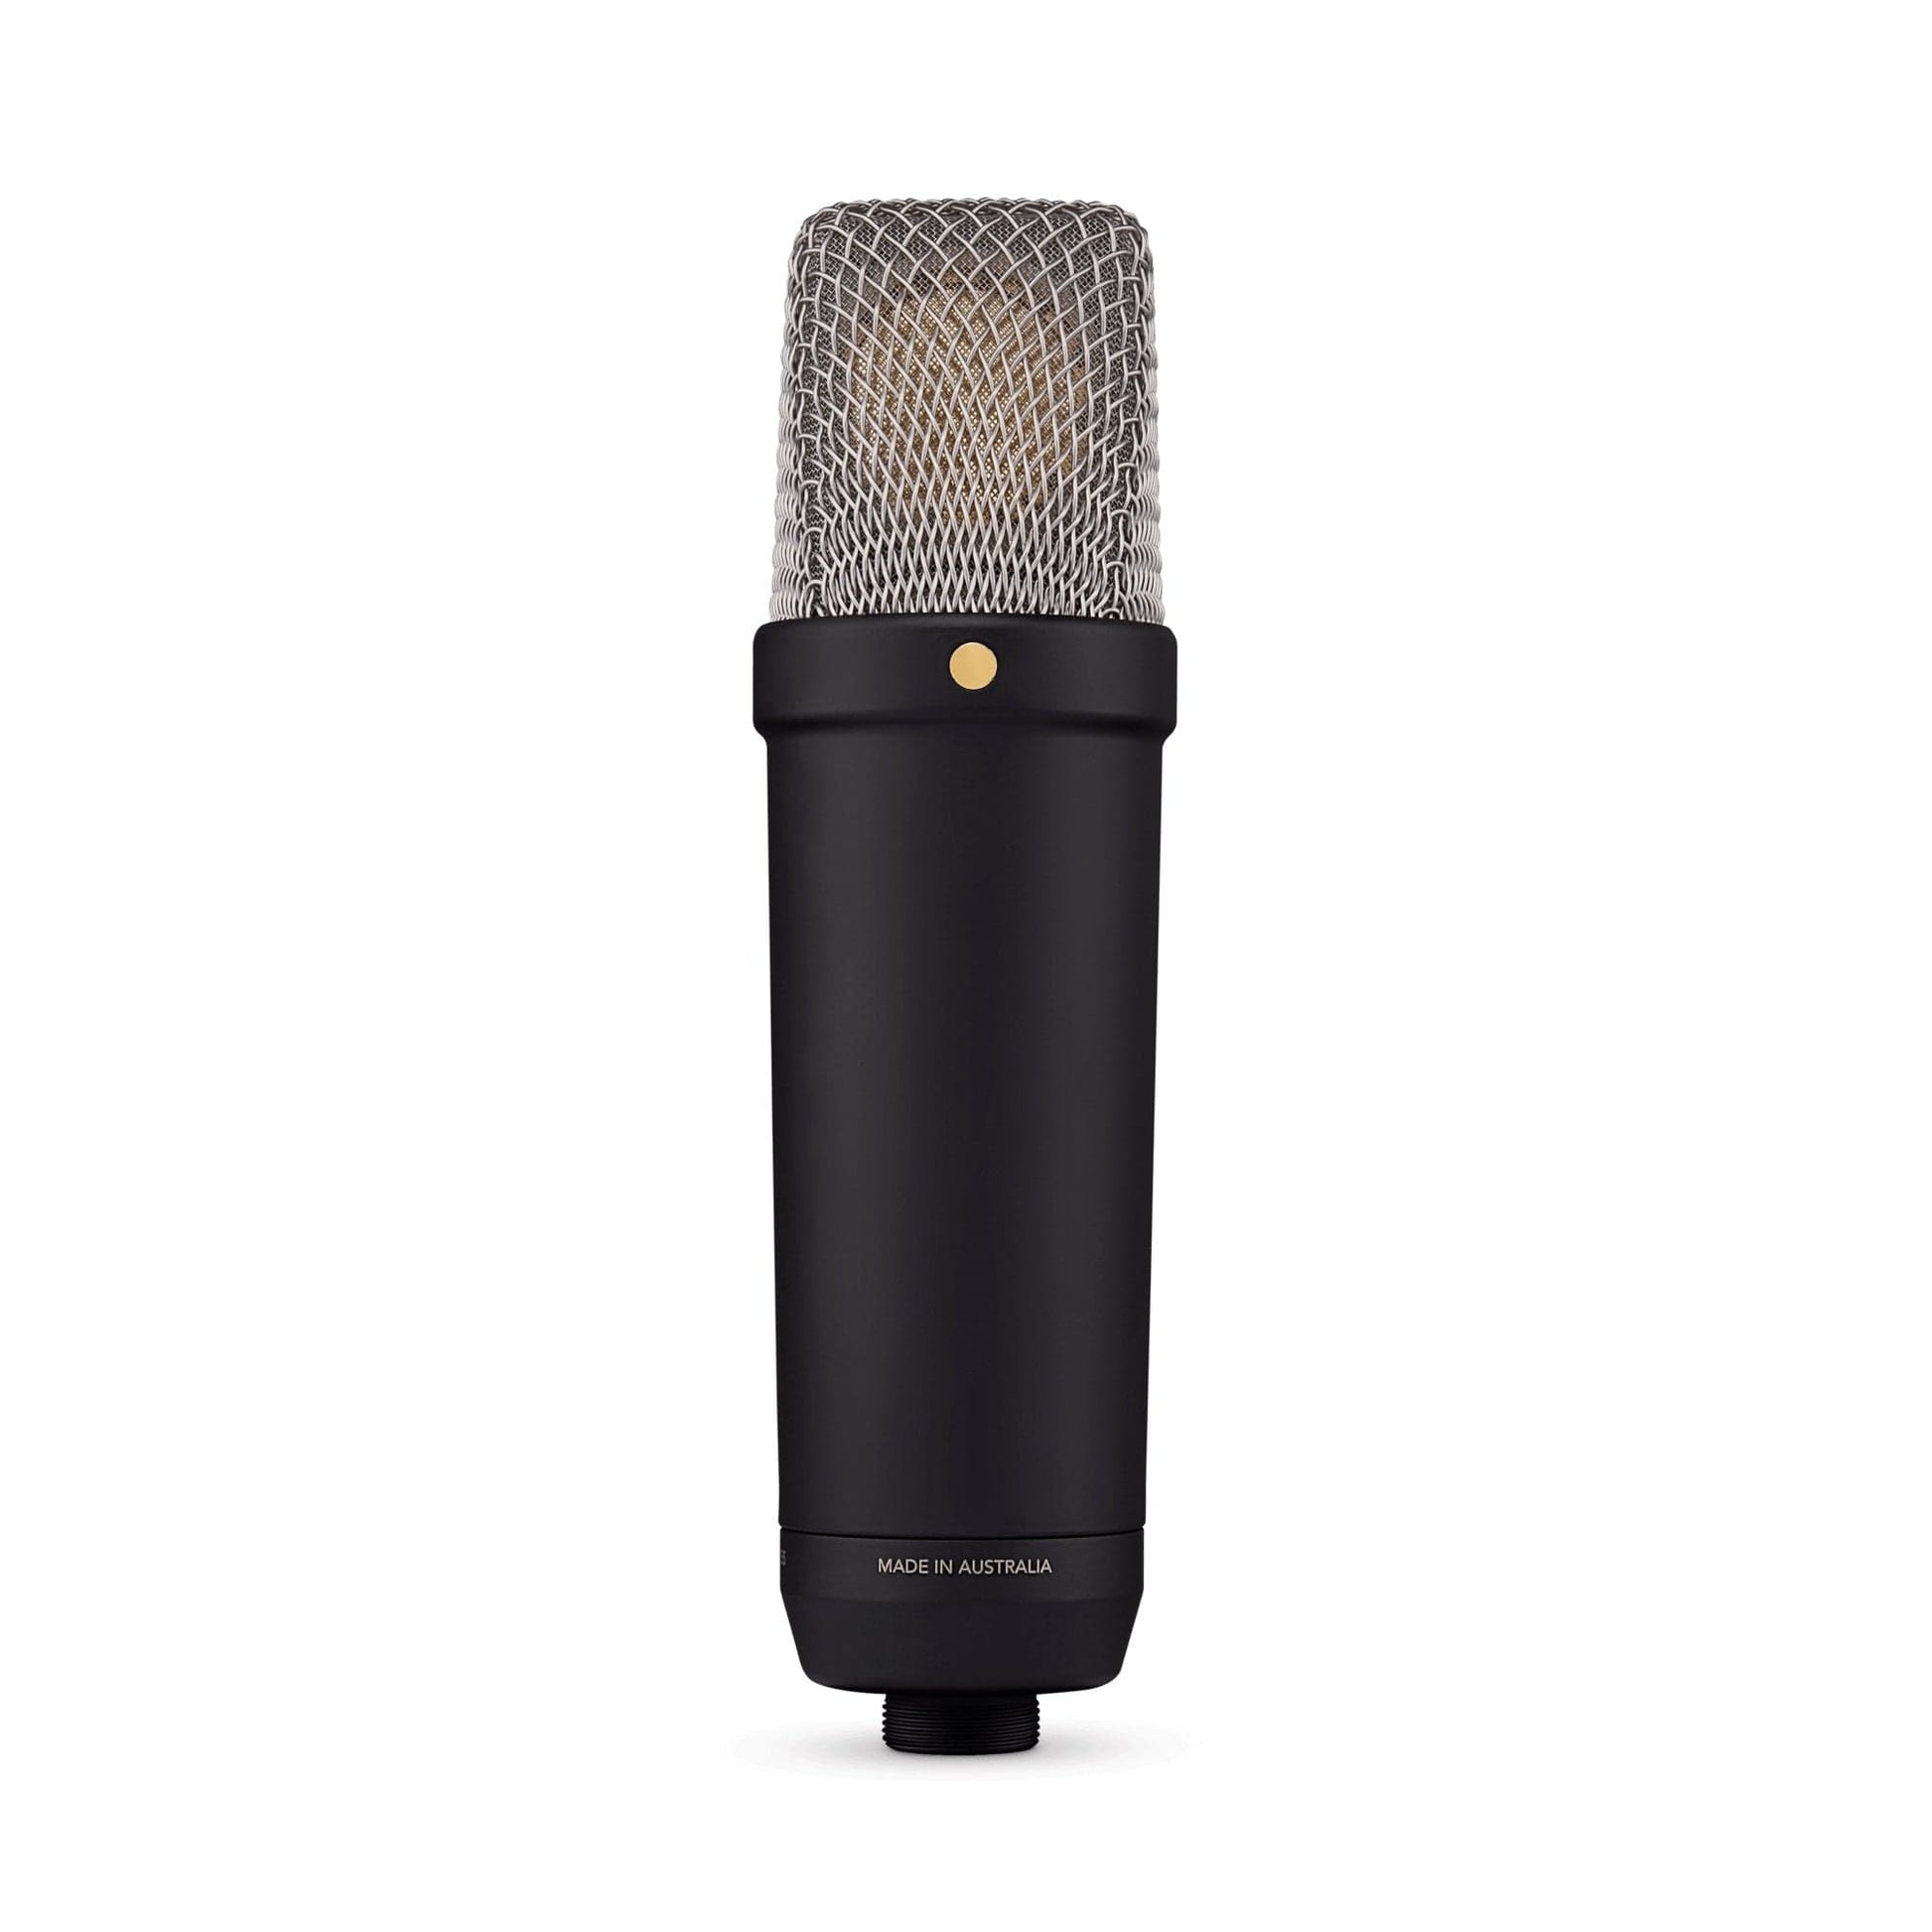 Rode NT1 5th Generation Hybrid Studio Condenser Microphone - Black - PSSL ProSound and Stage Lighting